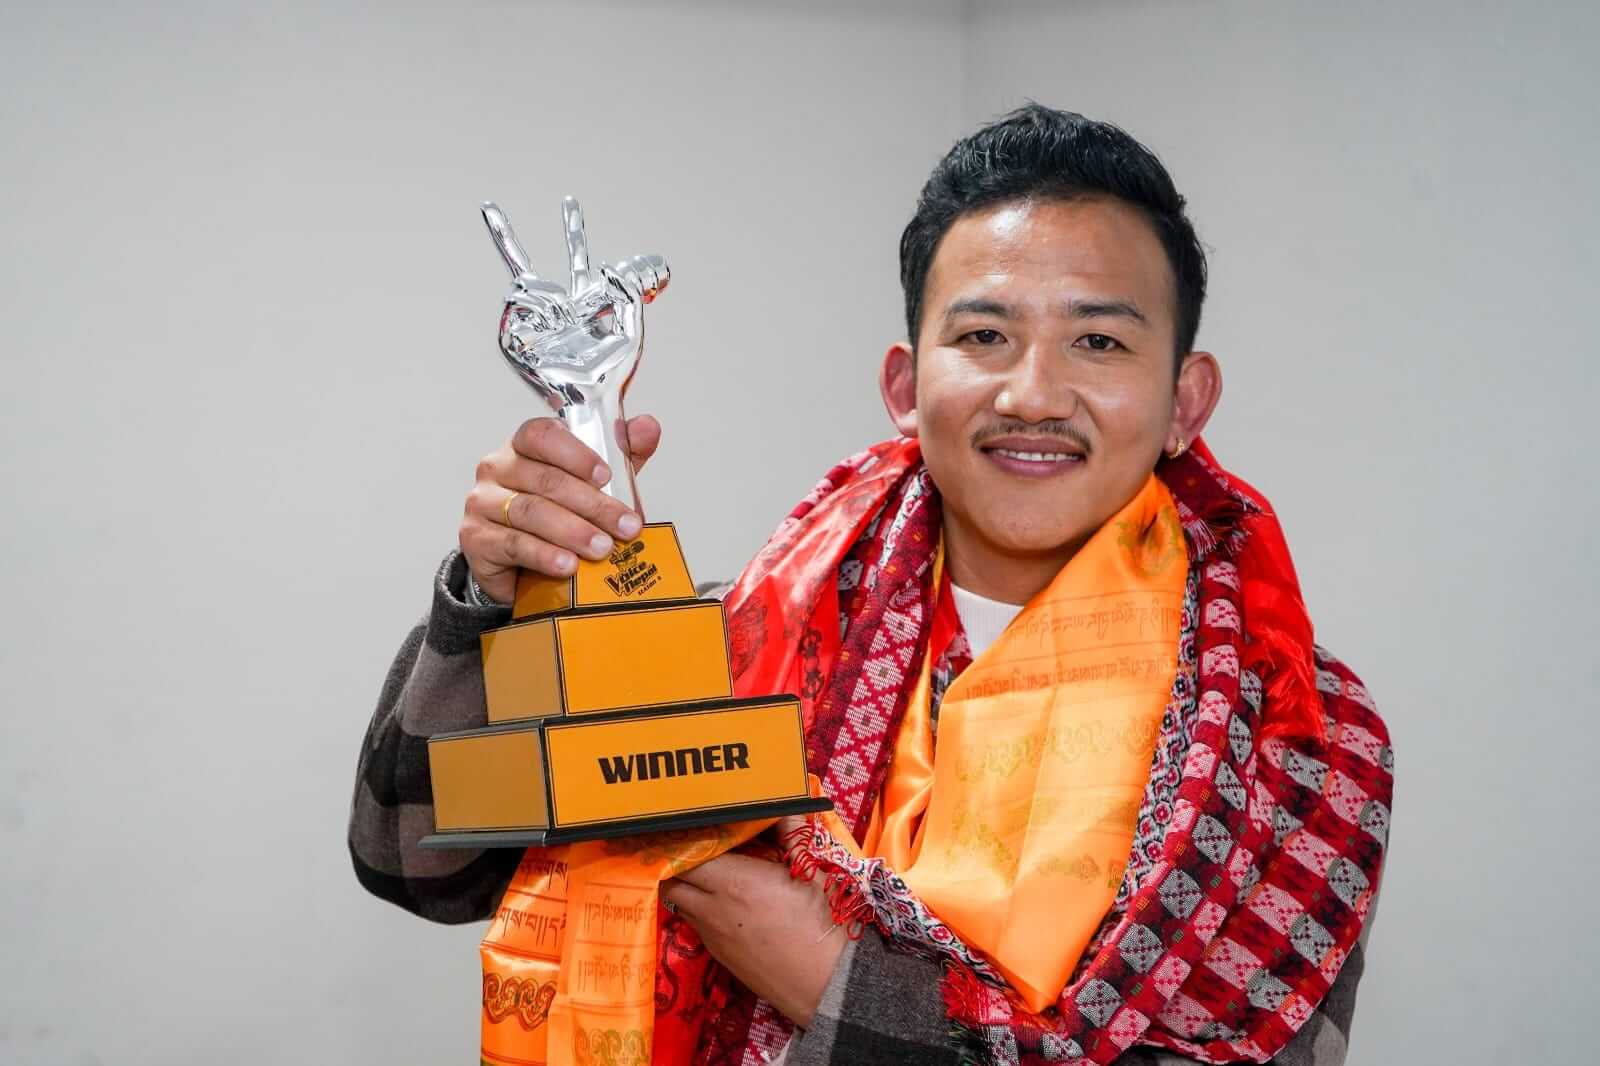 Winner Binod Rai